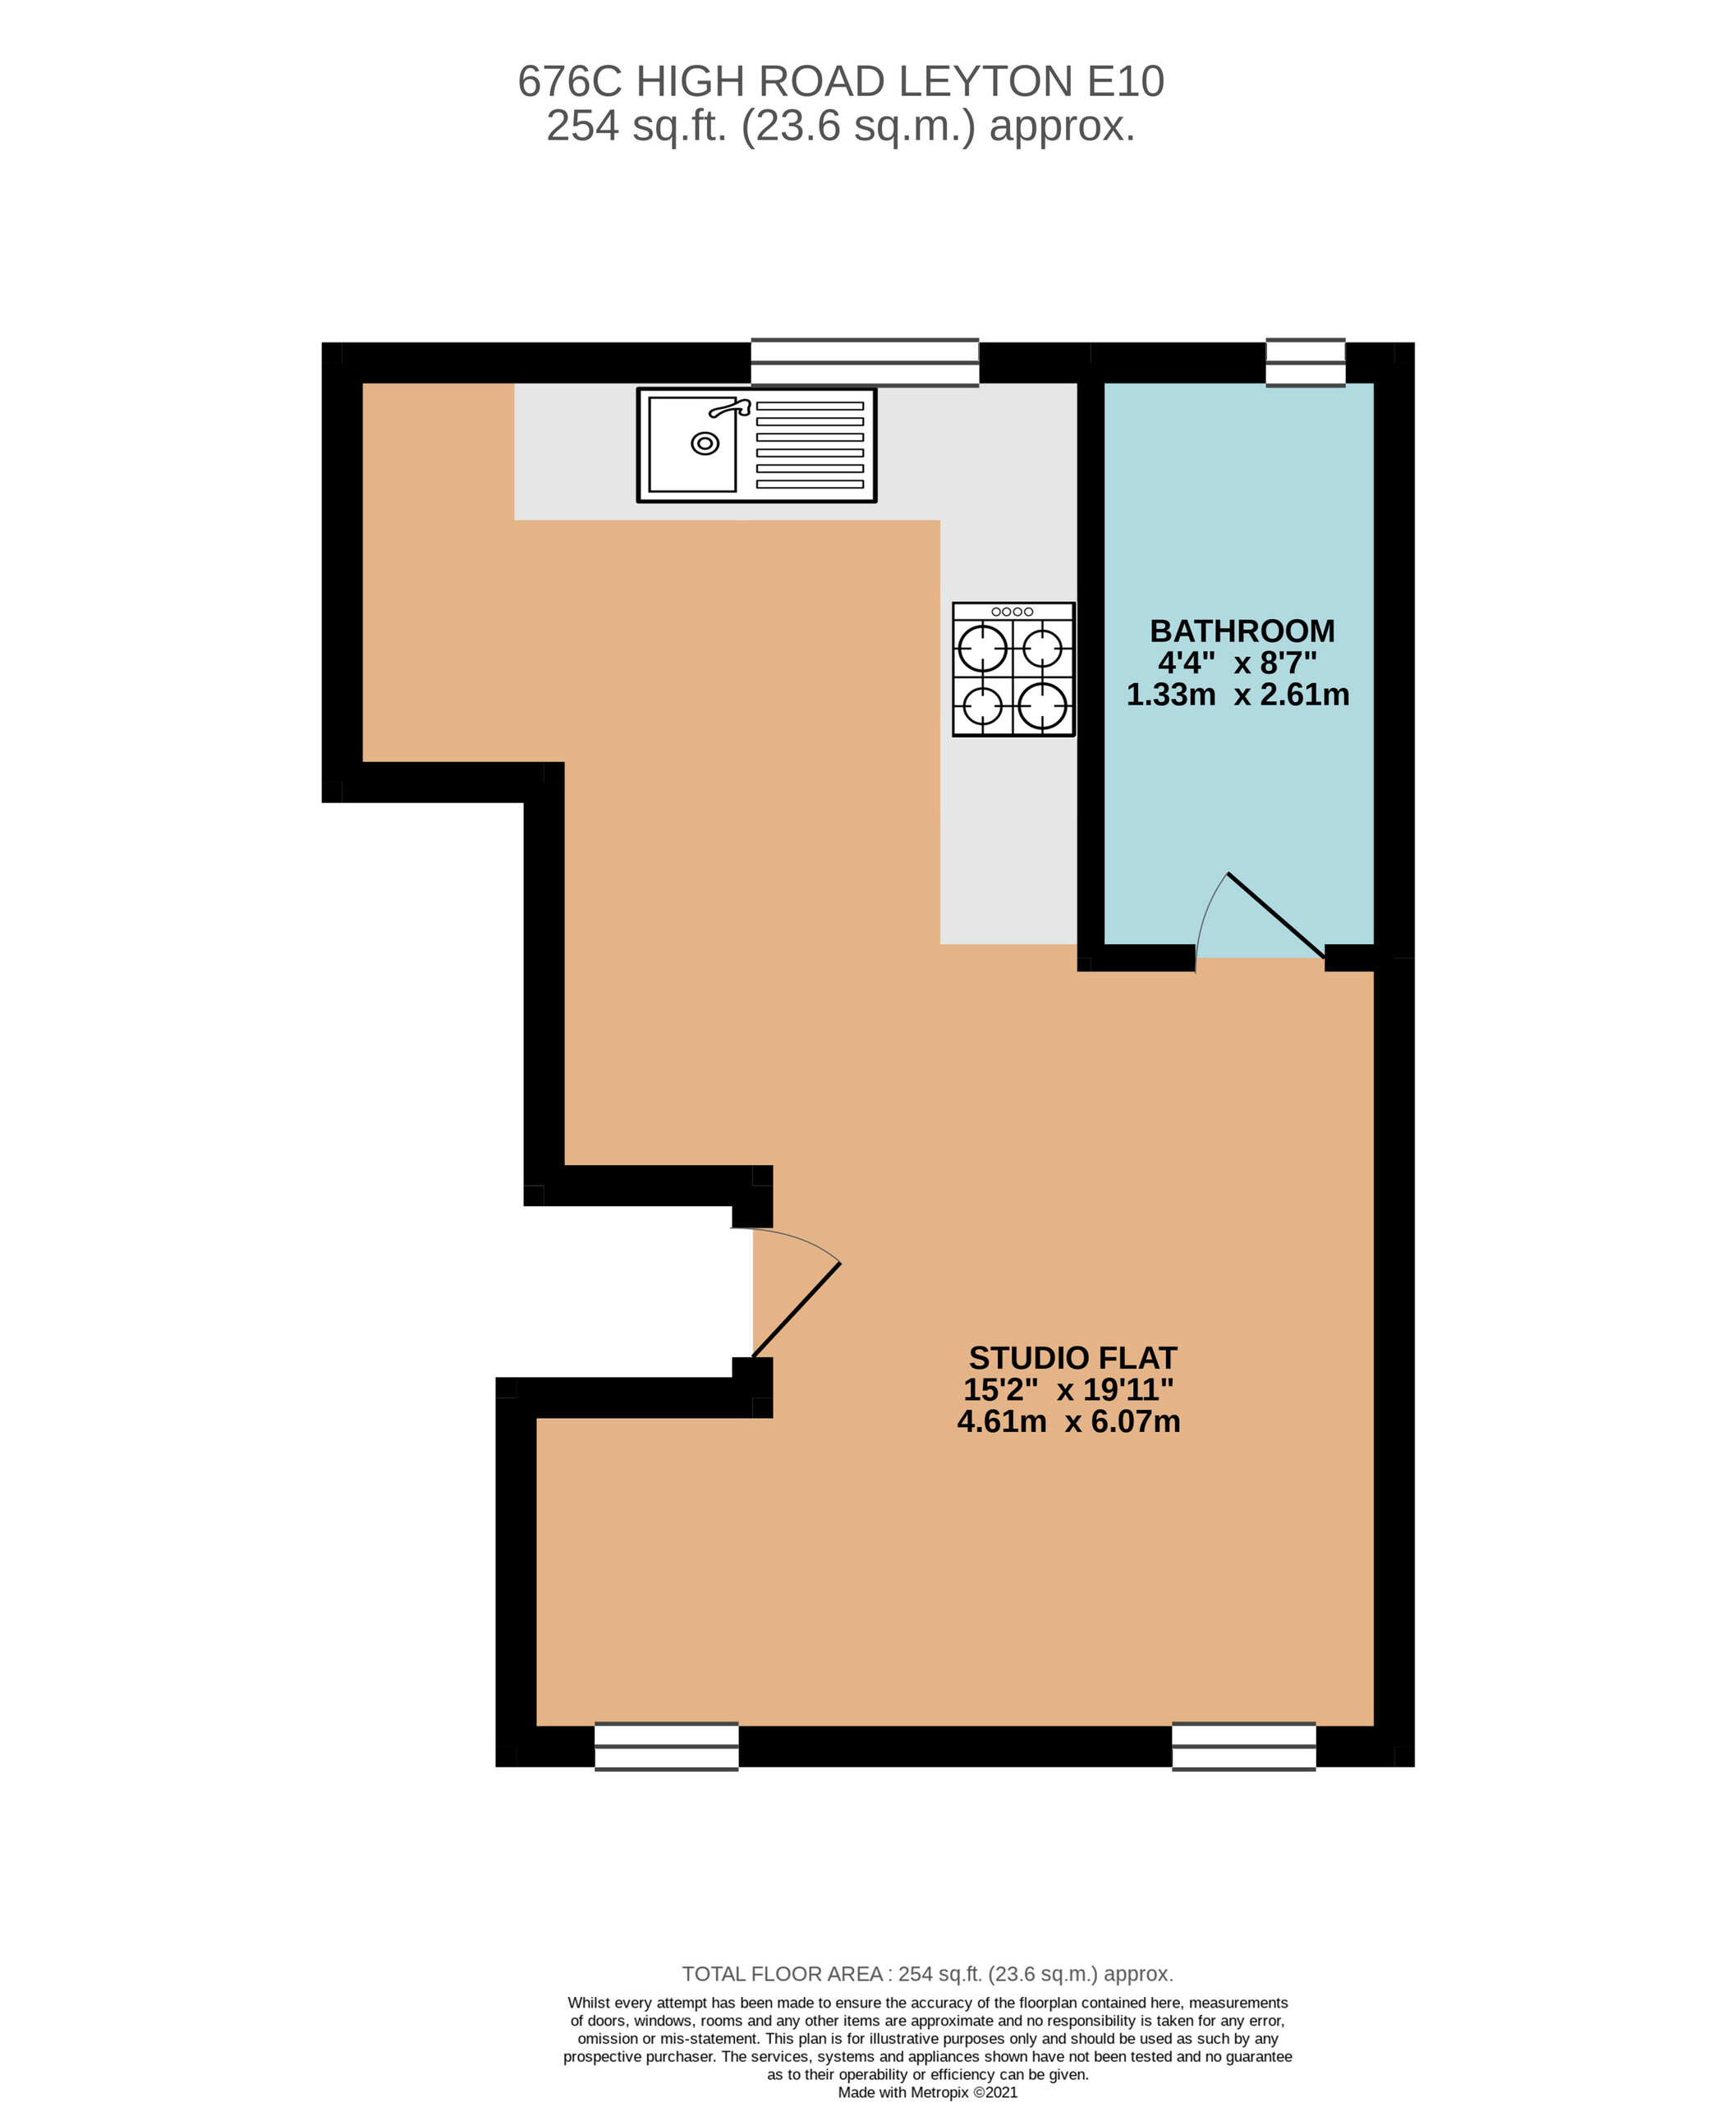 1 bed apartment to rent in High Road Leyton, Leyton - Property floorplan